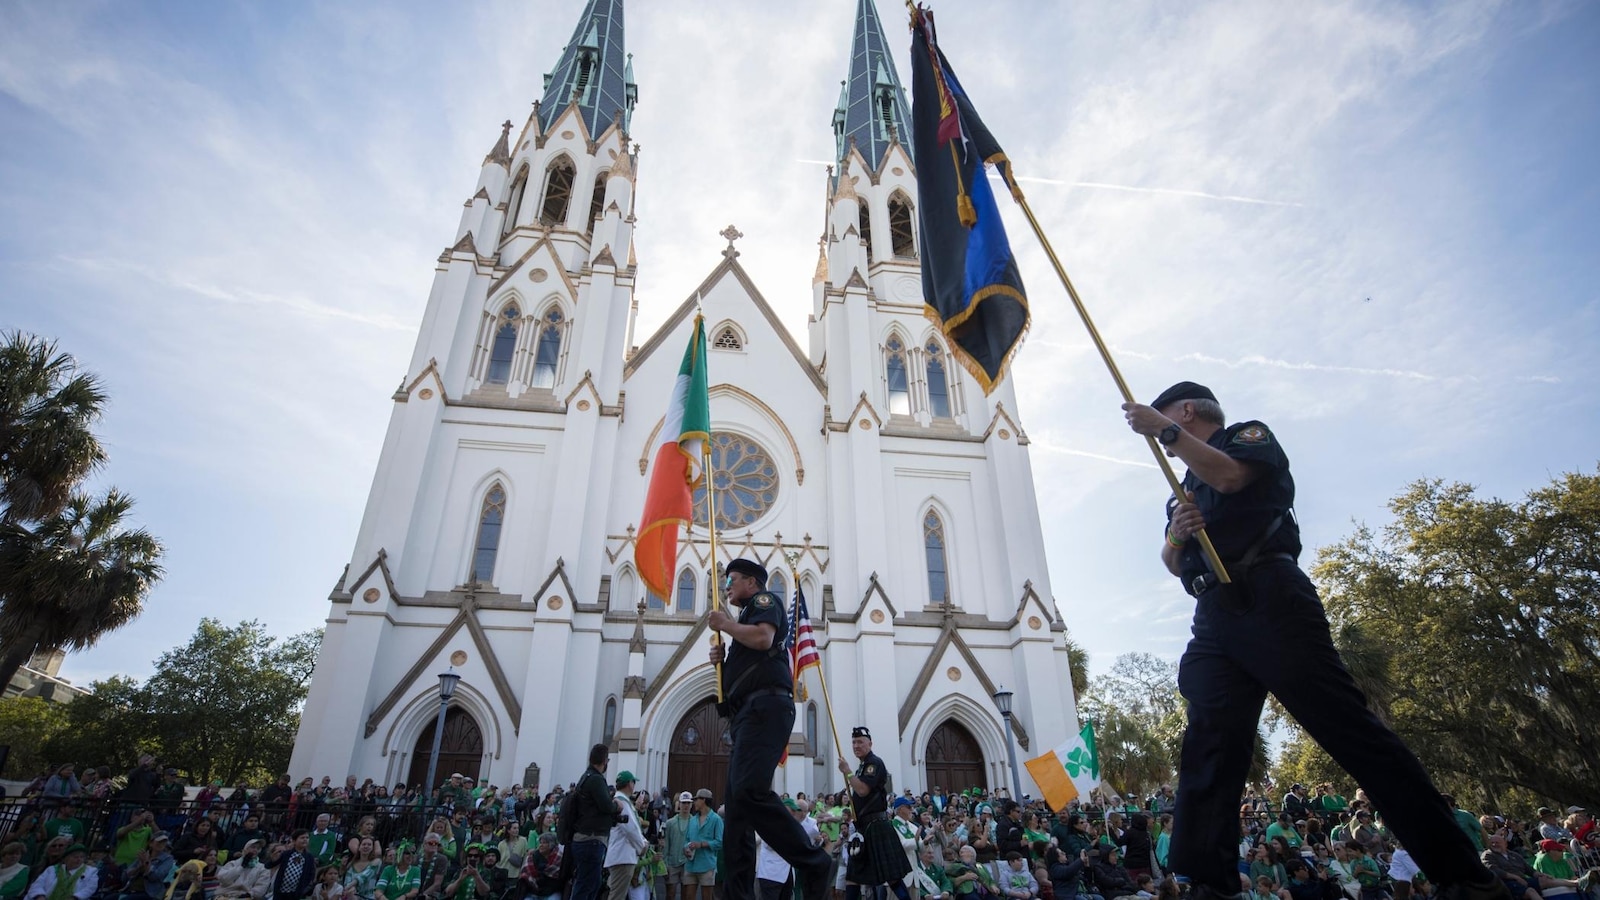 Savannah's 200th Anniversary St. Patrick's Day Parade Celebration: A Supersized Event